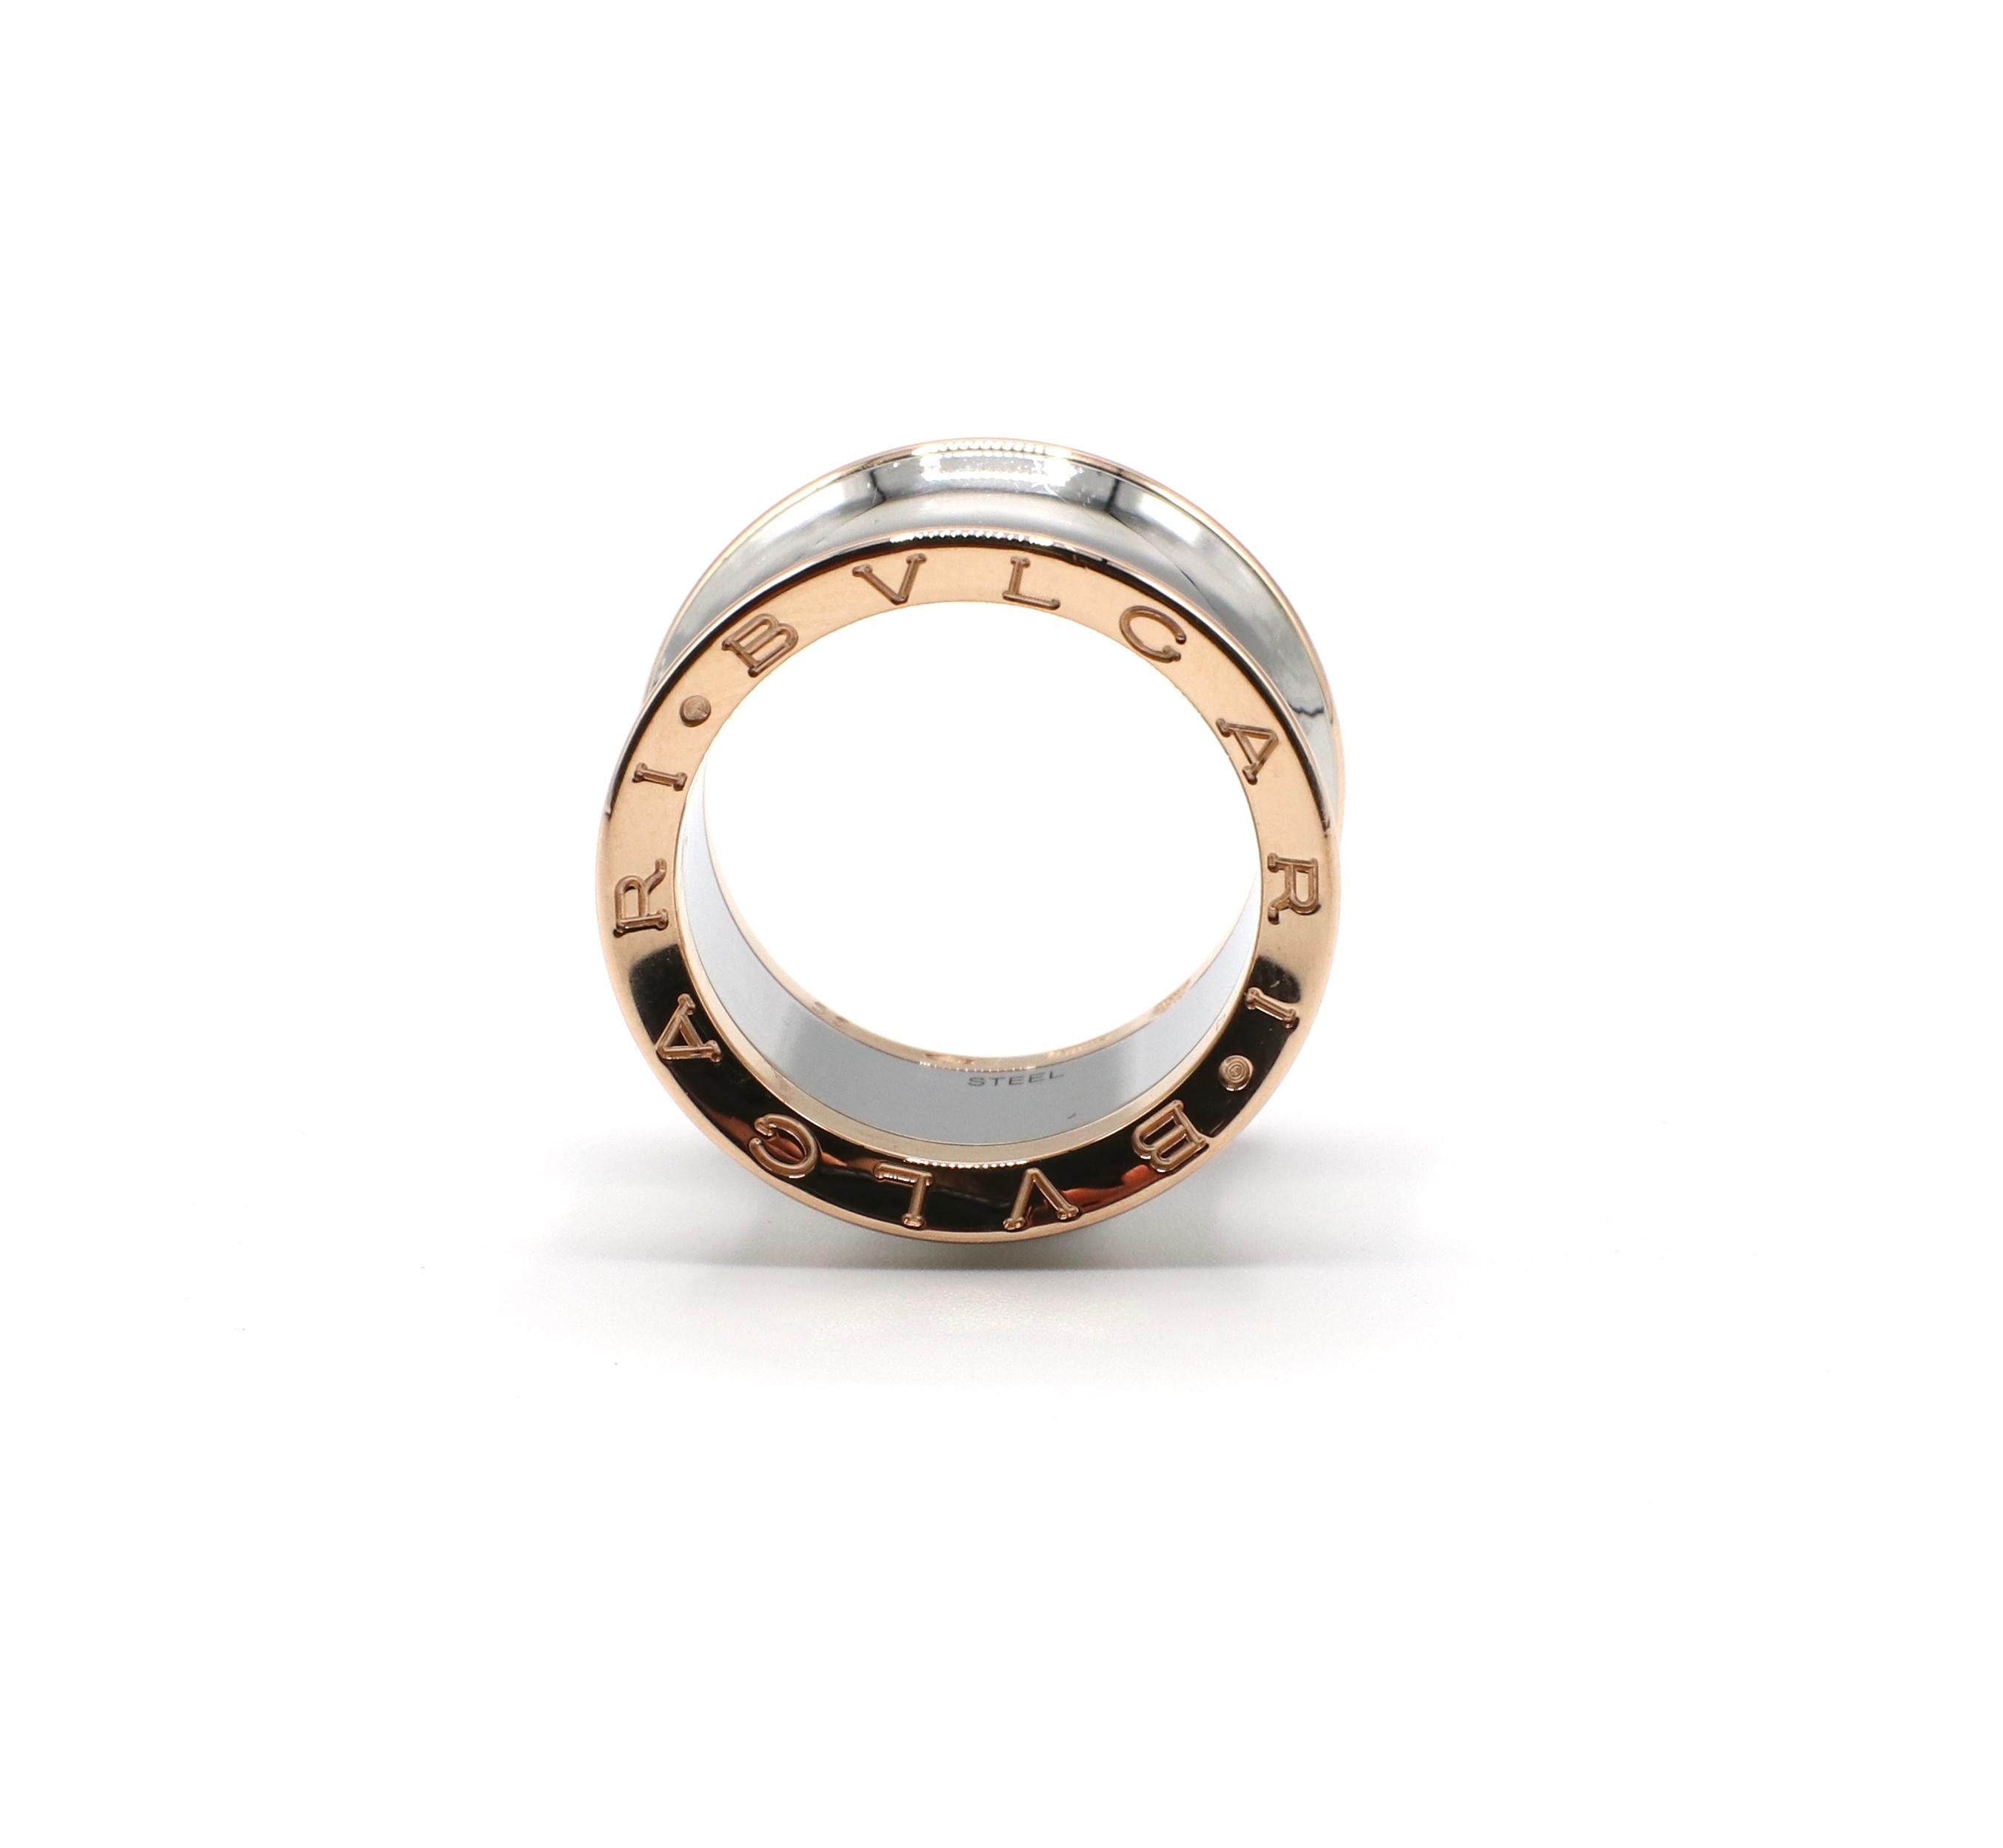 Bulgari Bvlgari B.Zero1 Anish Kapoor Pink Gold and Steel Ring Size 55

Metal: 18k rose gold & stainless steel
Weight: 10.5 grams
Size: 55 European (approx. 7.25 US) 
Stamped: 